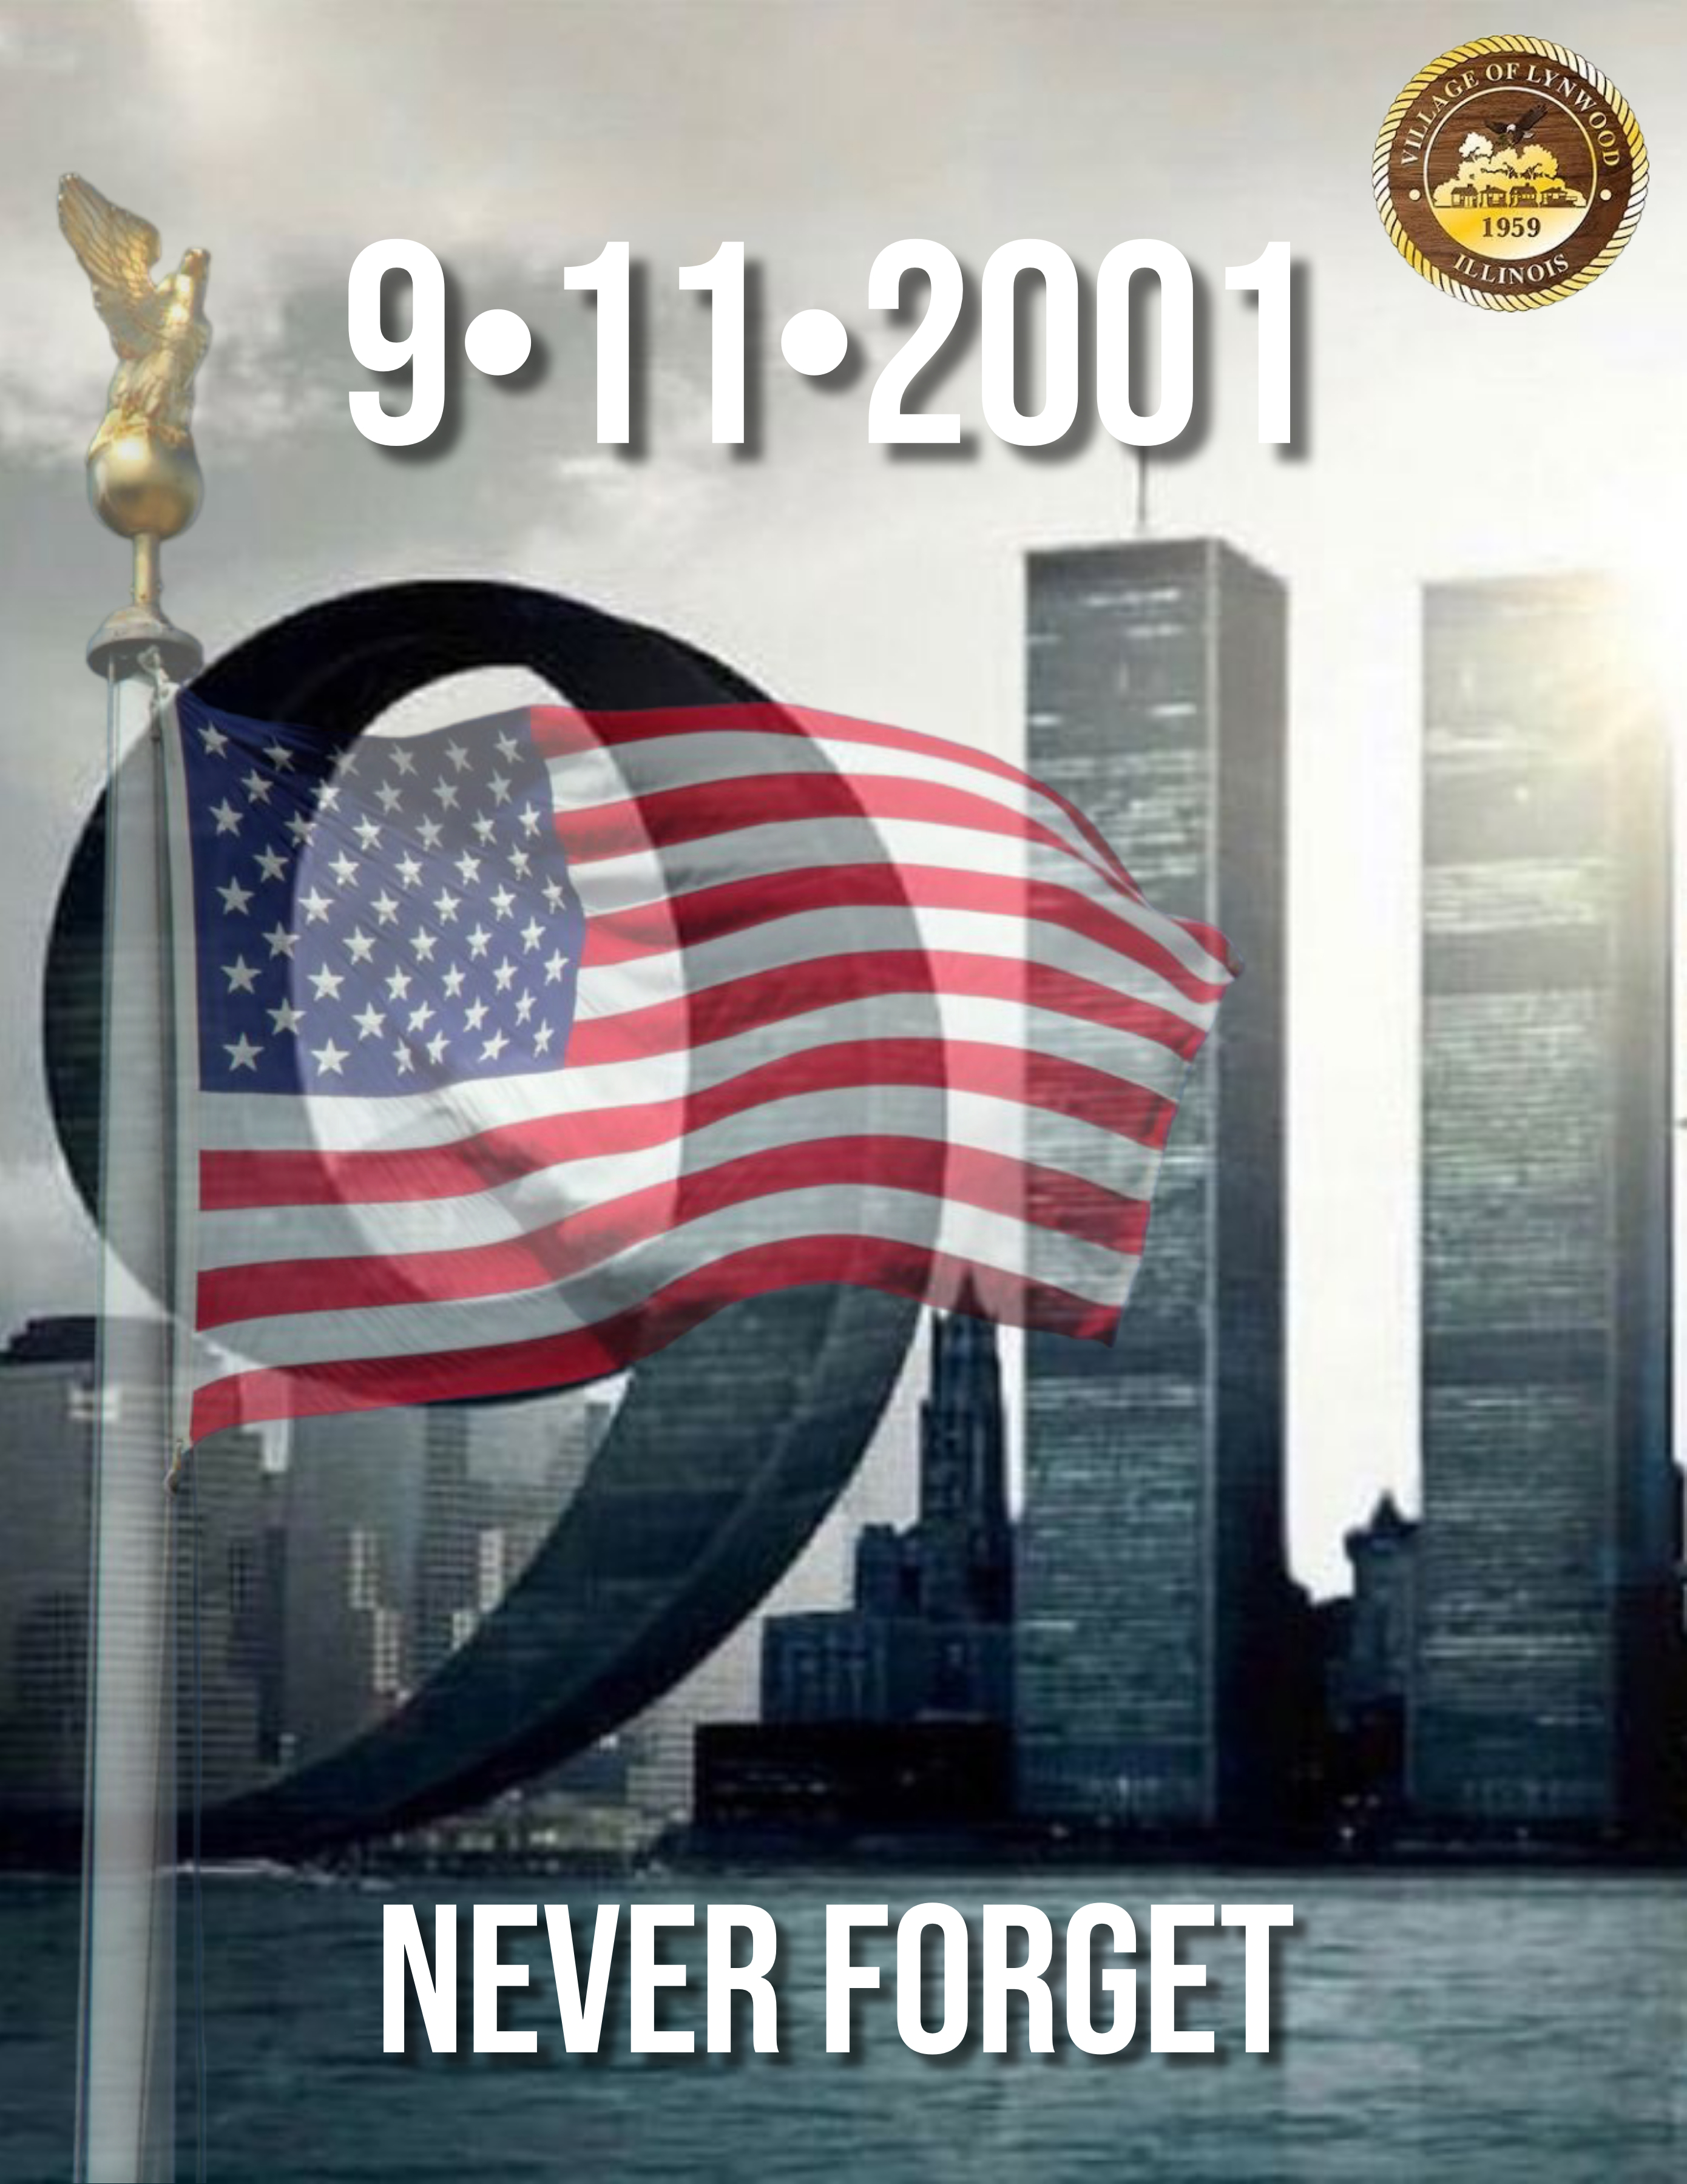 911 patriot day for America